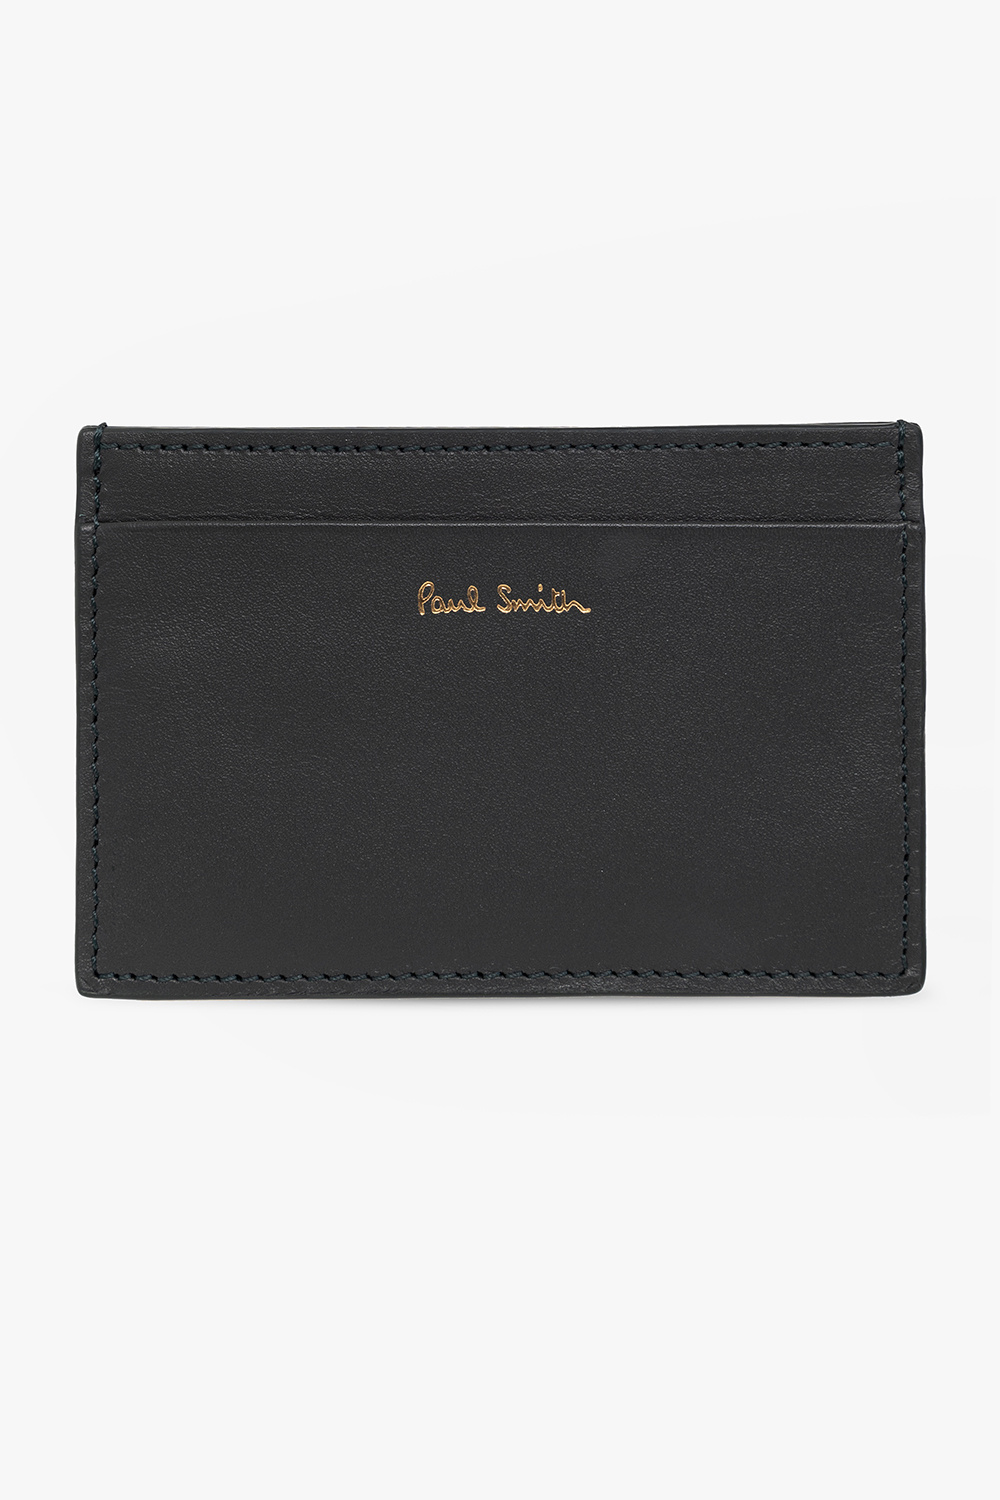 Paul Smith Leather card case